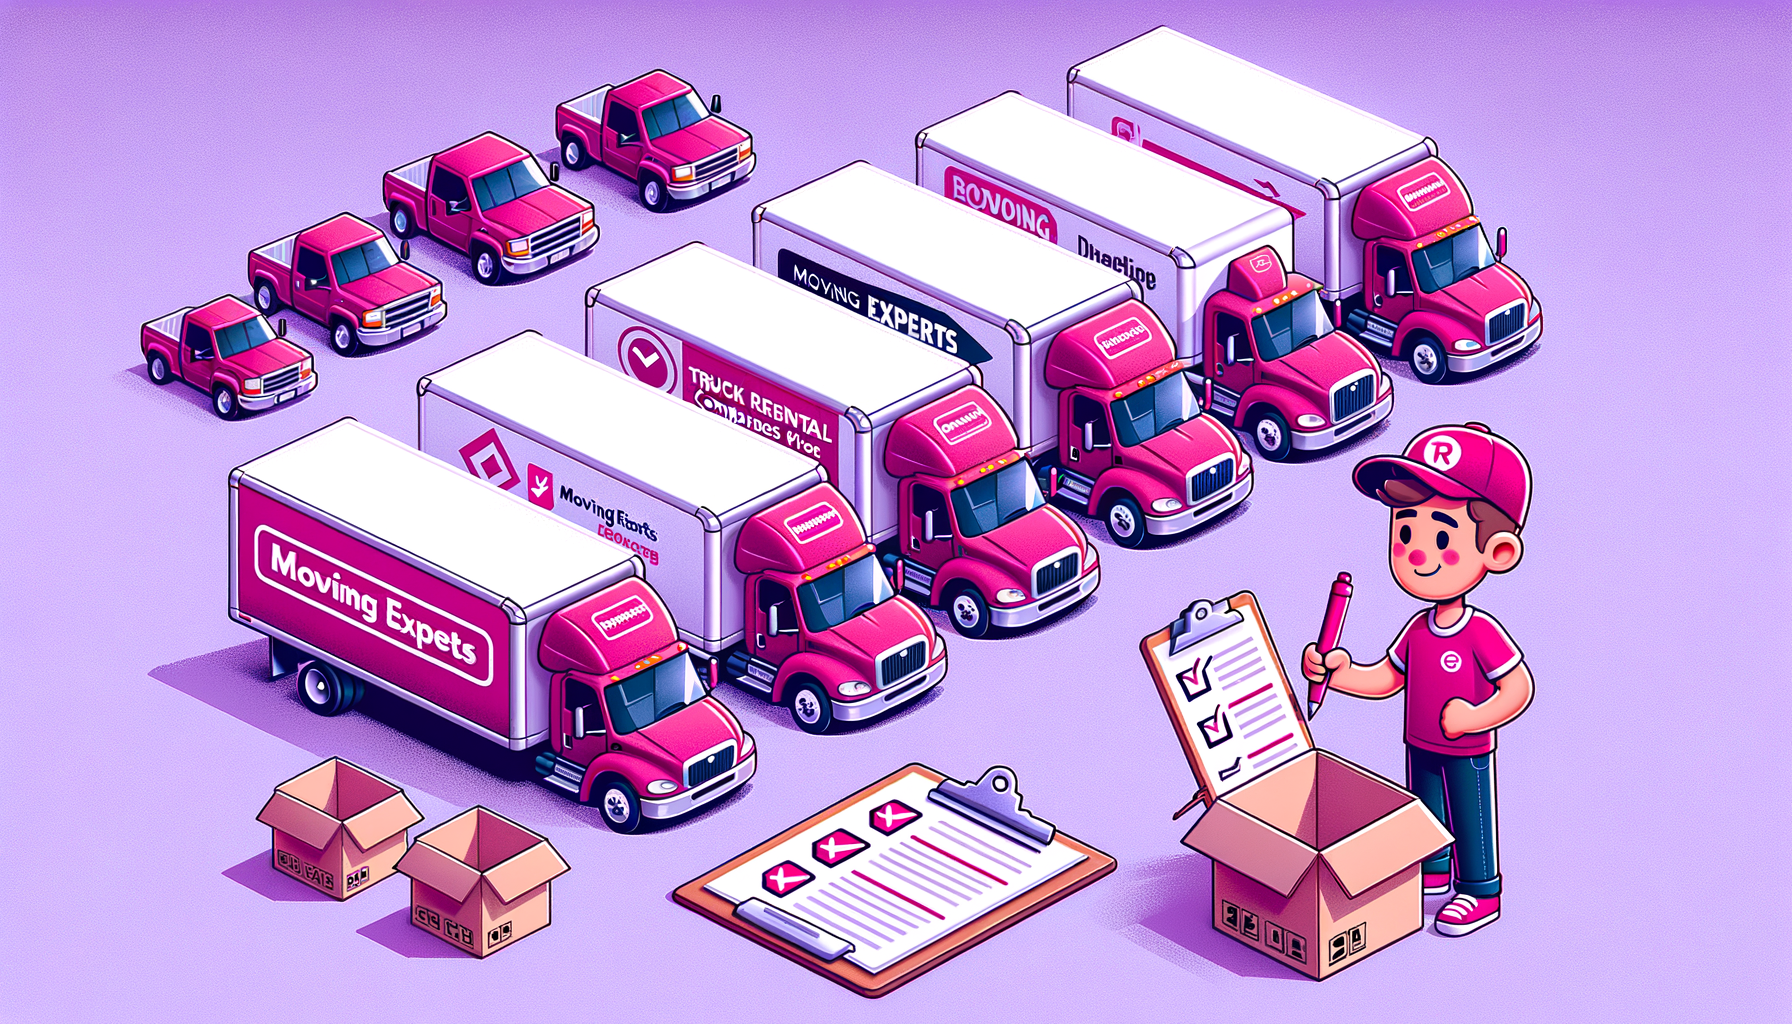 Illustration of a fuschia cartoon-like moving truck, symbolizing comparison of top truck rental companies.